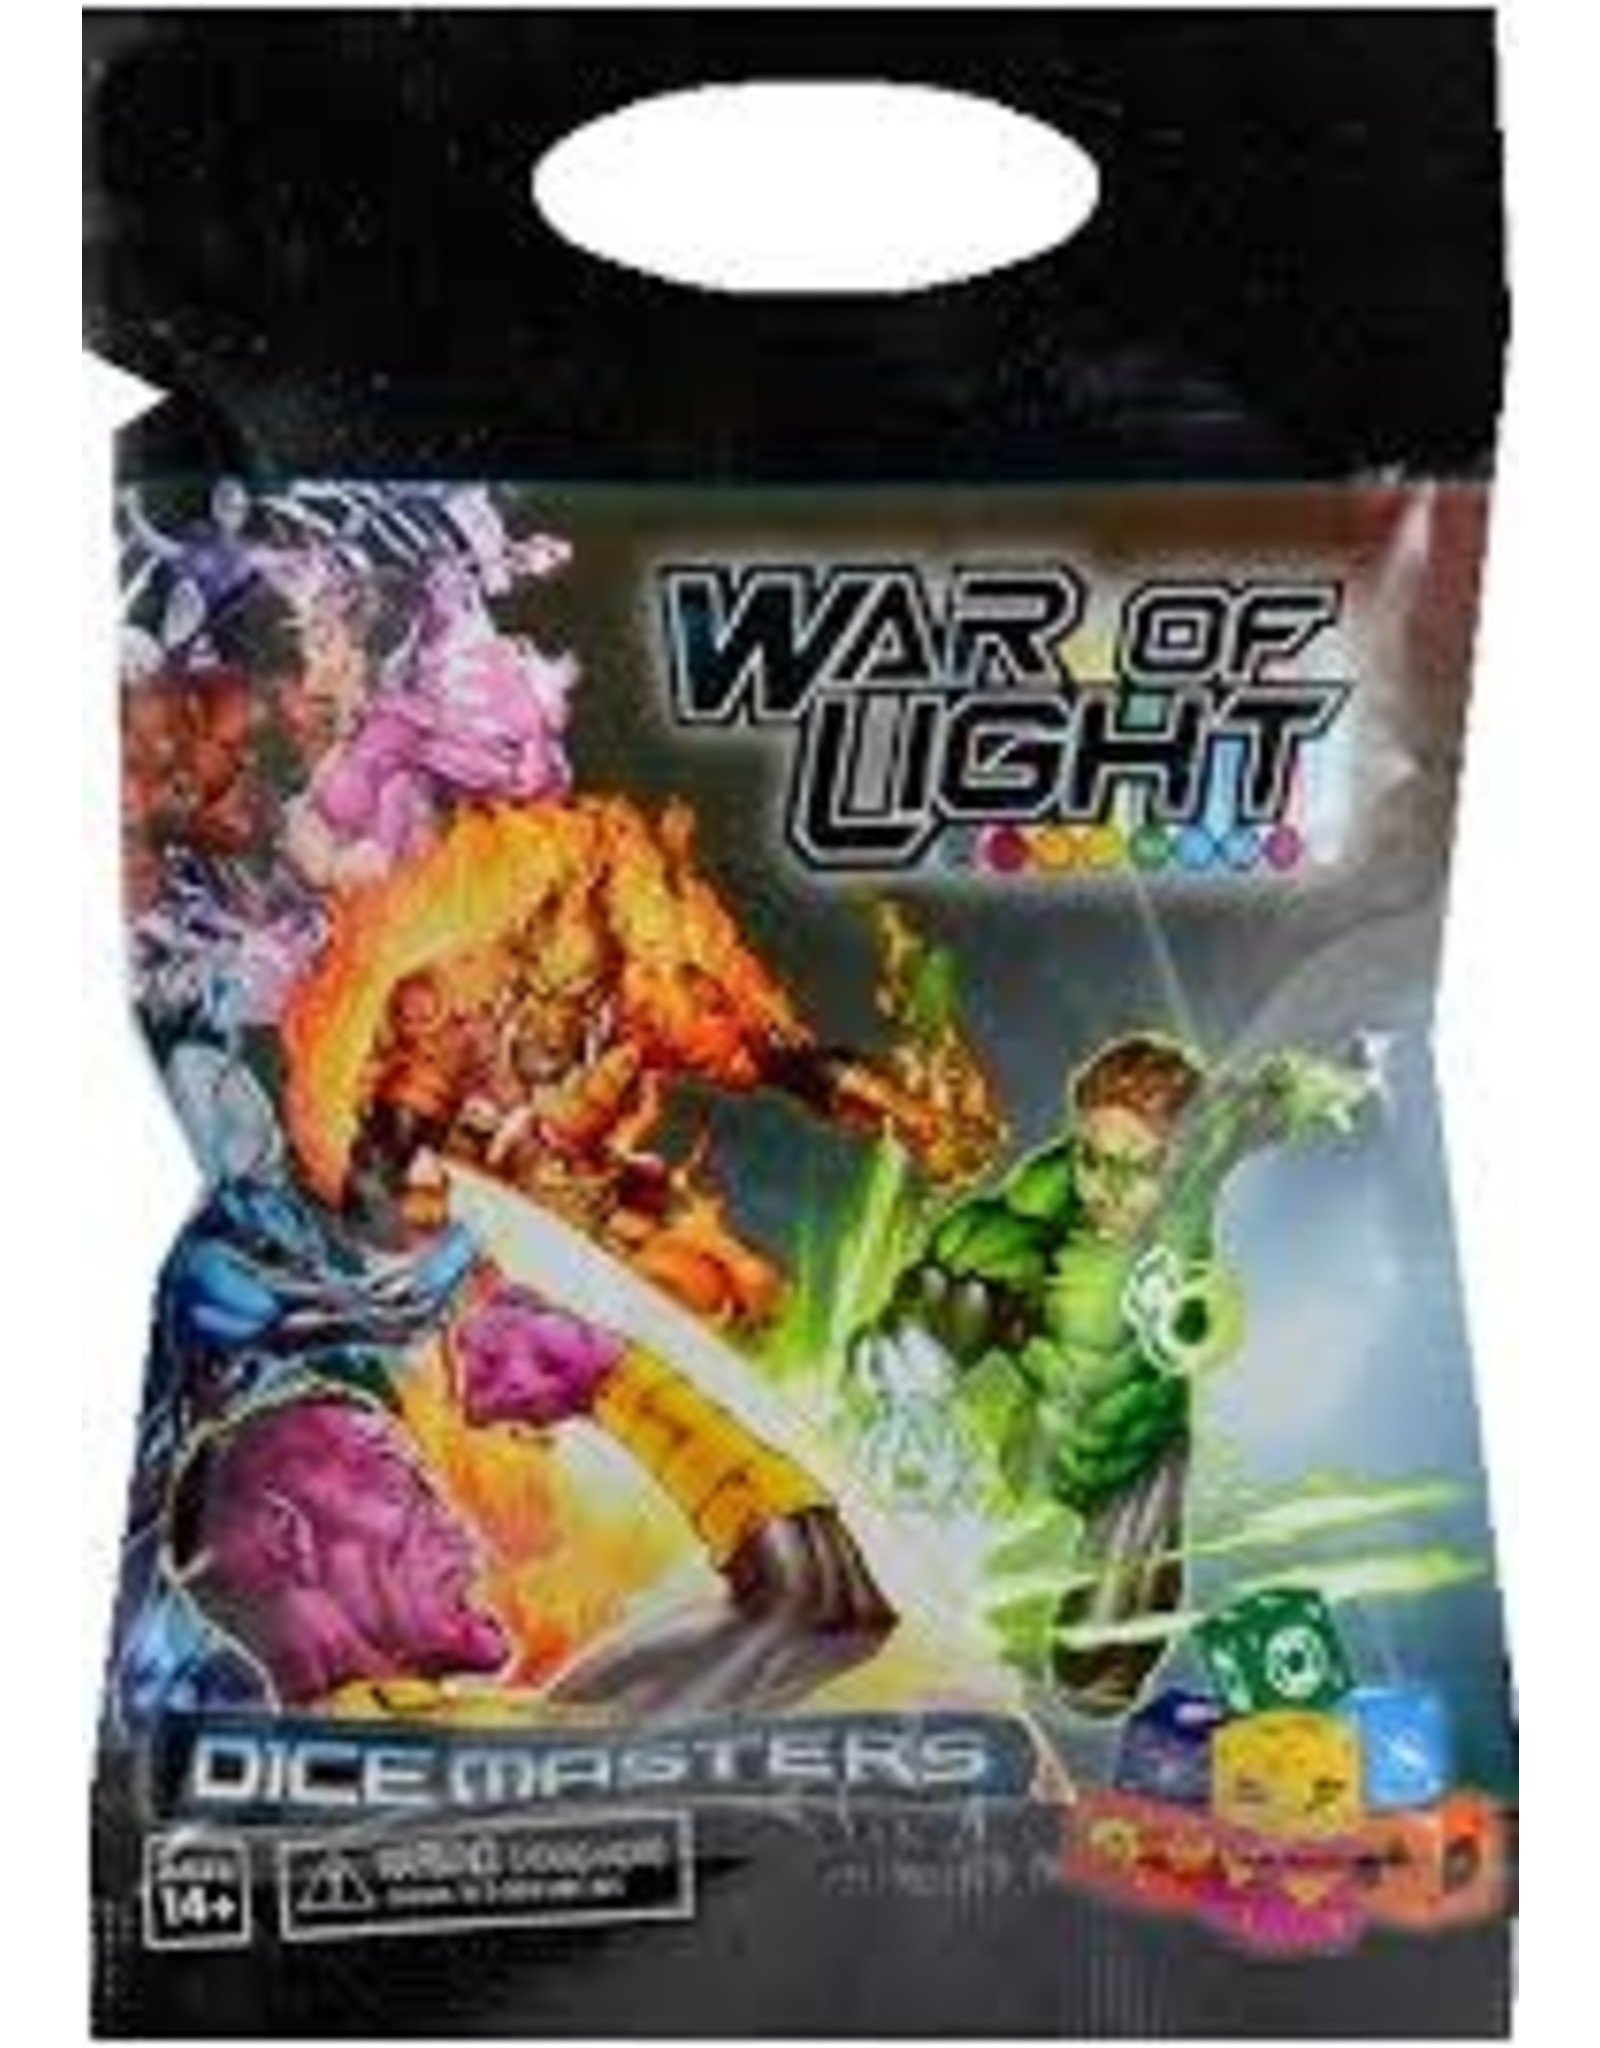 Wizkids DC Dice Masters: War of Light Booster Pack